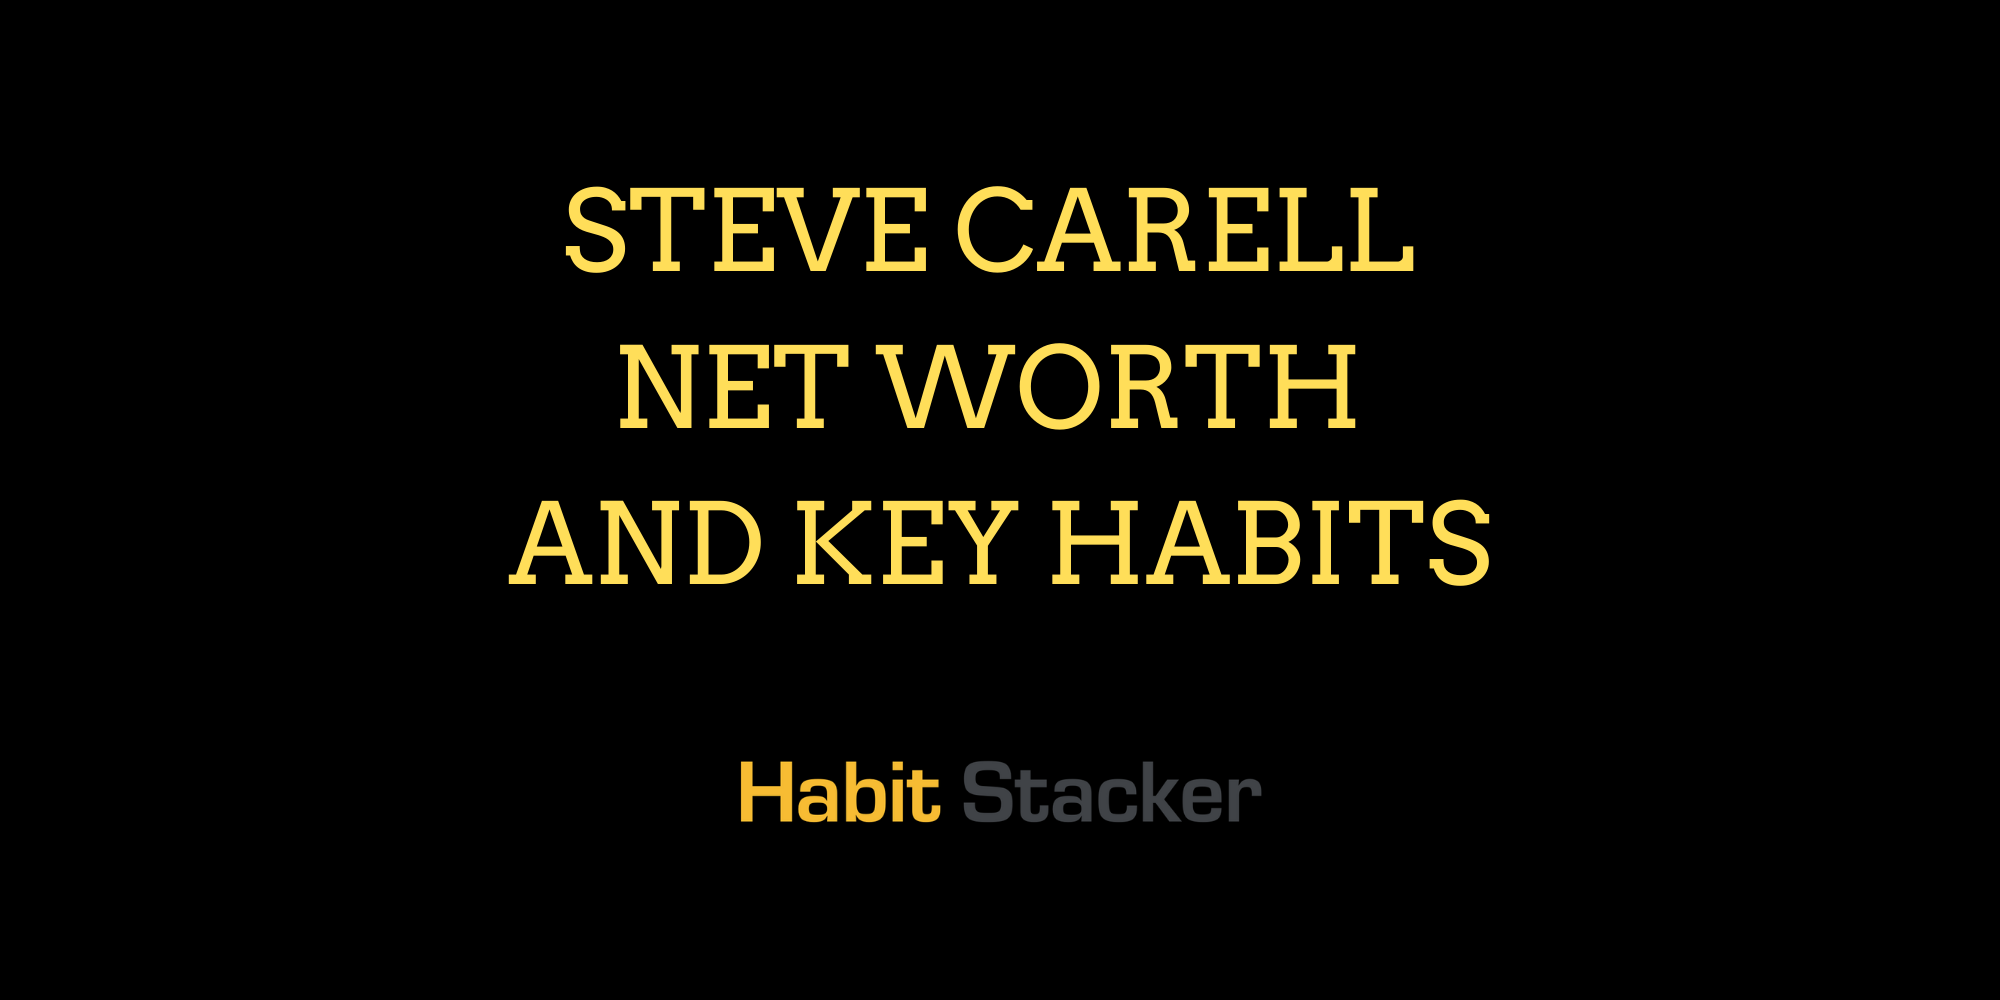 Steve Carell Net Worth and Key Habits